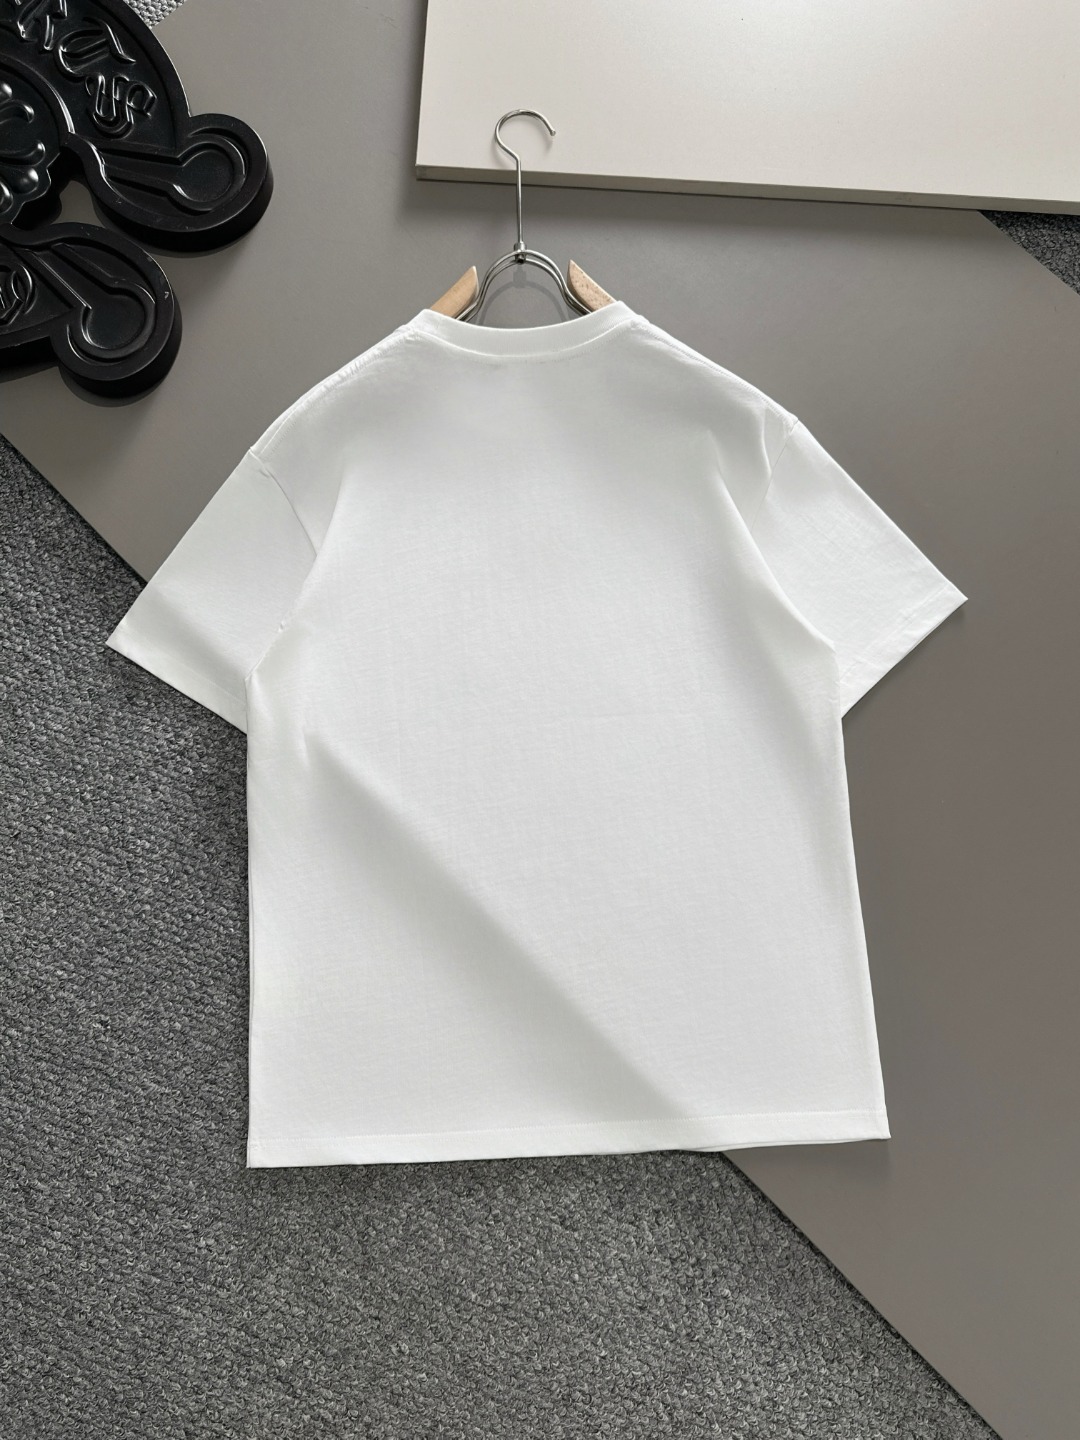 PD#24春夏顶级短袖T恤采用客供进口100%-32支双股新疆棉面料制成原版面料品牌辨识度超级强高街与精